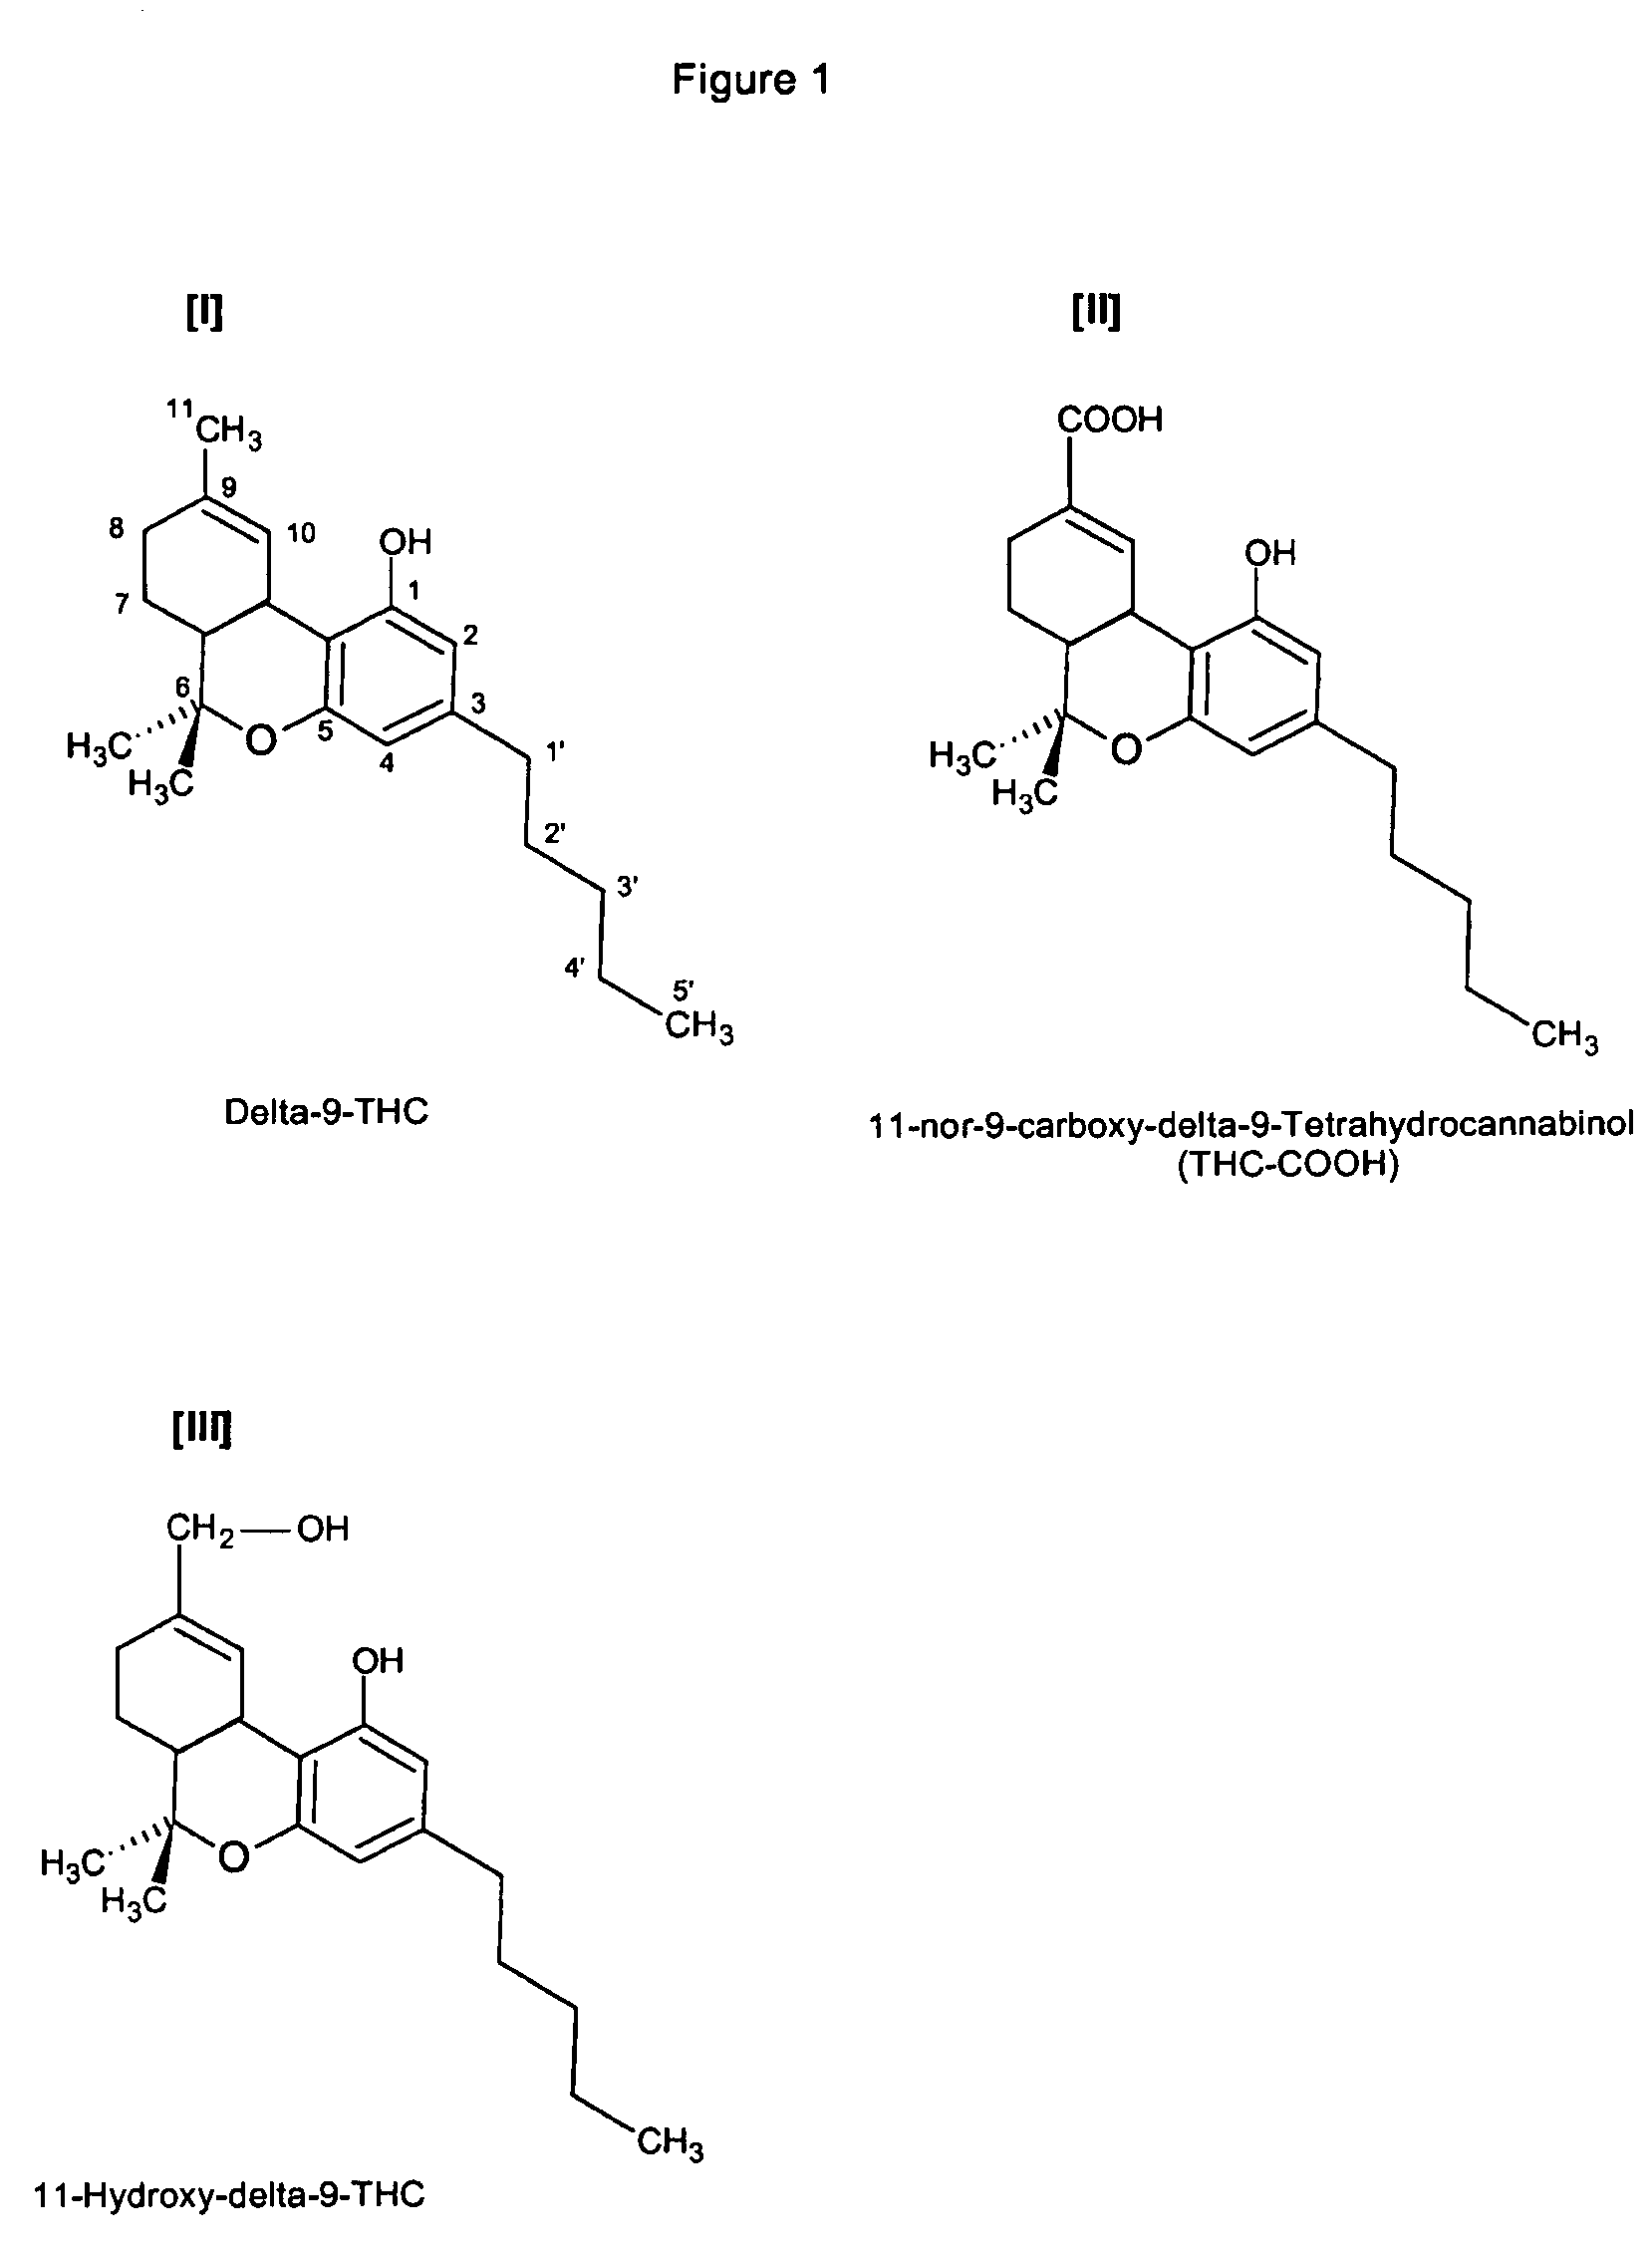 Delta-9-tetrahydrocannabinol detection method